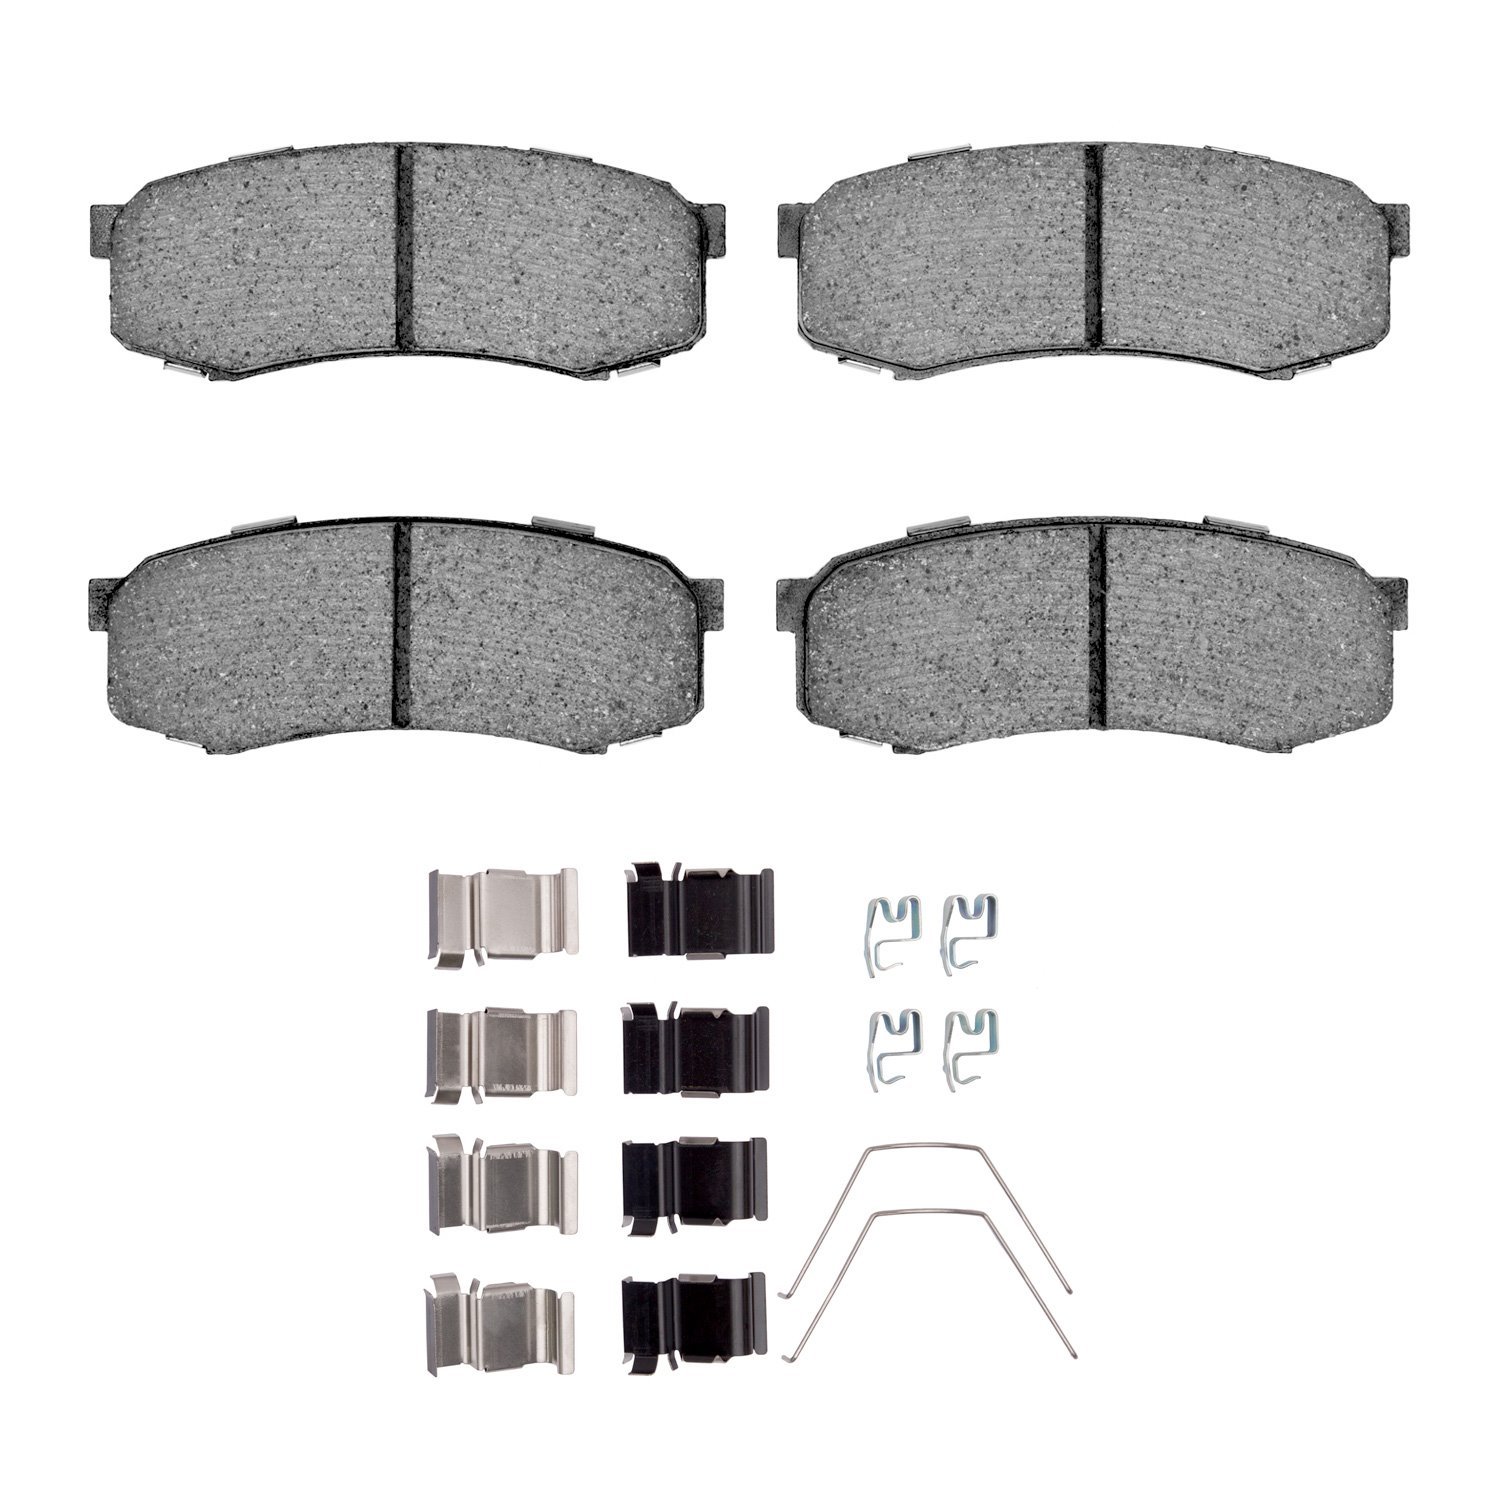 Optimum OE Brake Pads & Hardware Kit, Fits Select Fits Multiple Makes/Models, Position: Rear